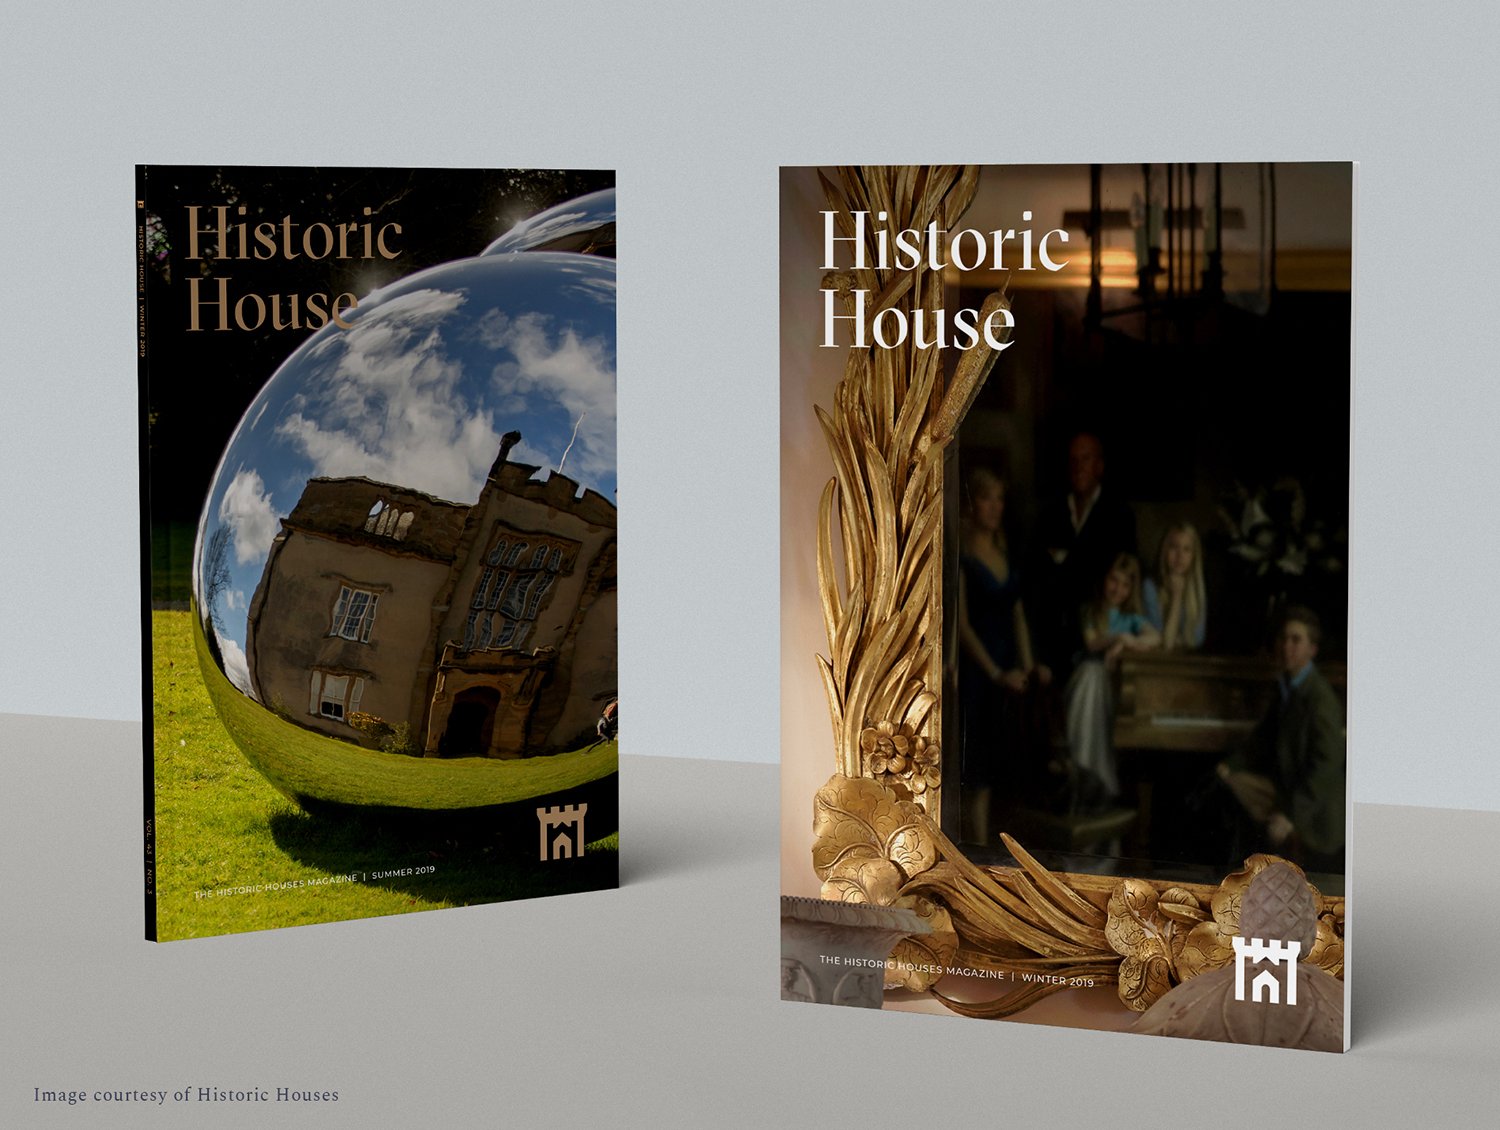 Historic House magazine covers